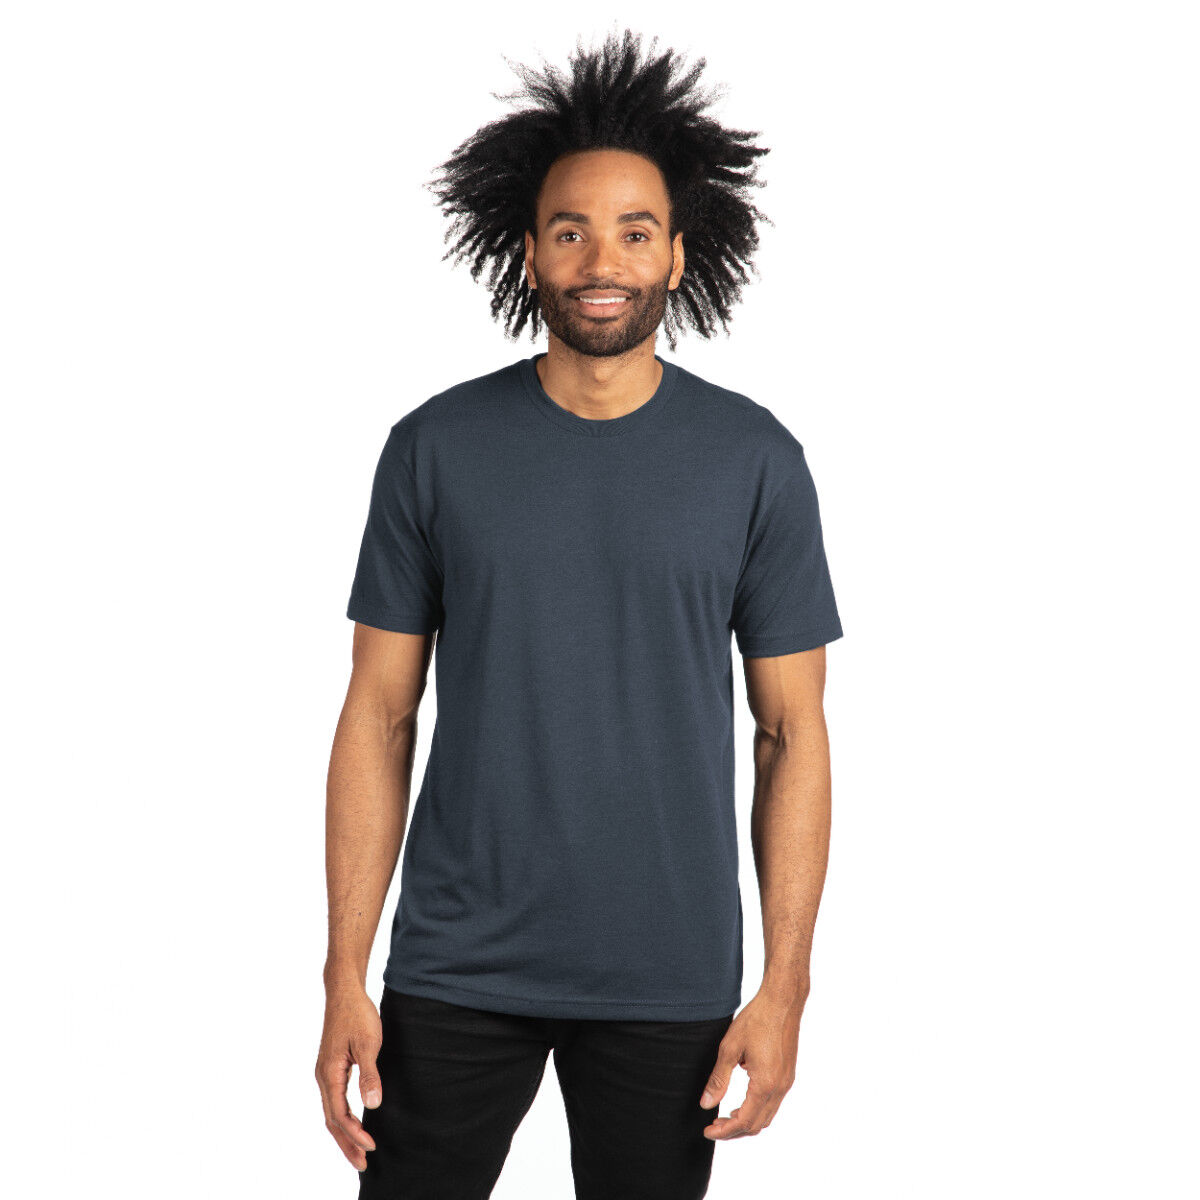 Next Level Unisex Tri-Blend T-Shirt